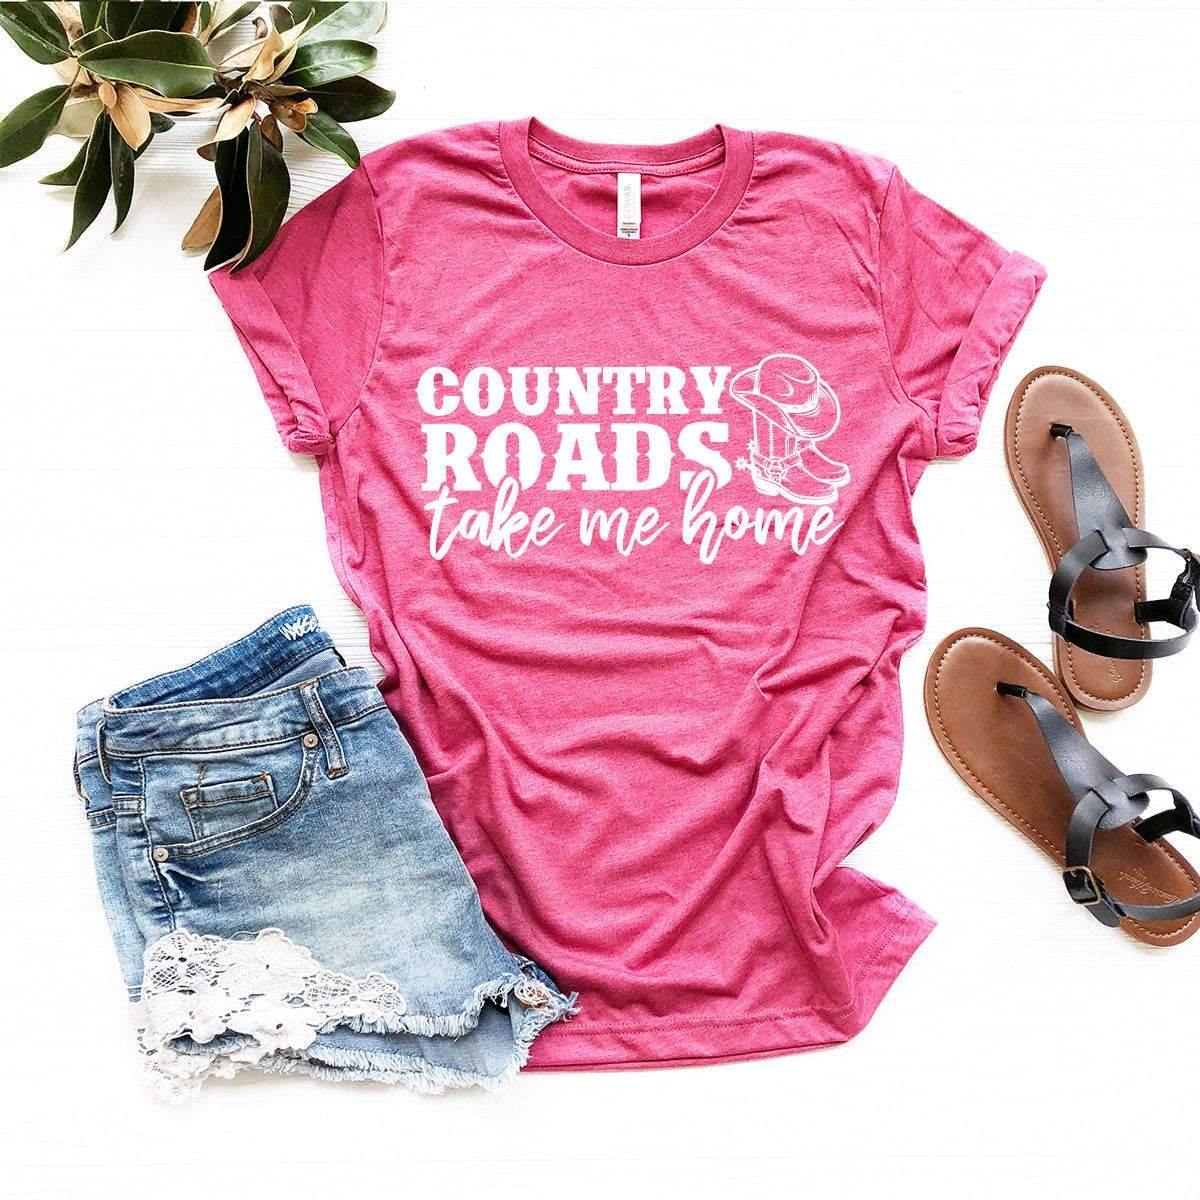 Country Girl Shirt, Western Girl Shirt, Cowgirl Boots Shirt, Southern Girl Shirt, Country Roads Take Me Home Shirt, Southern T-Shirt - Fastdeliverytees.com